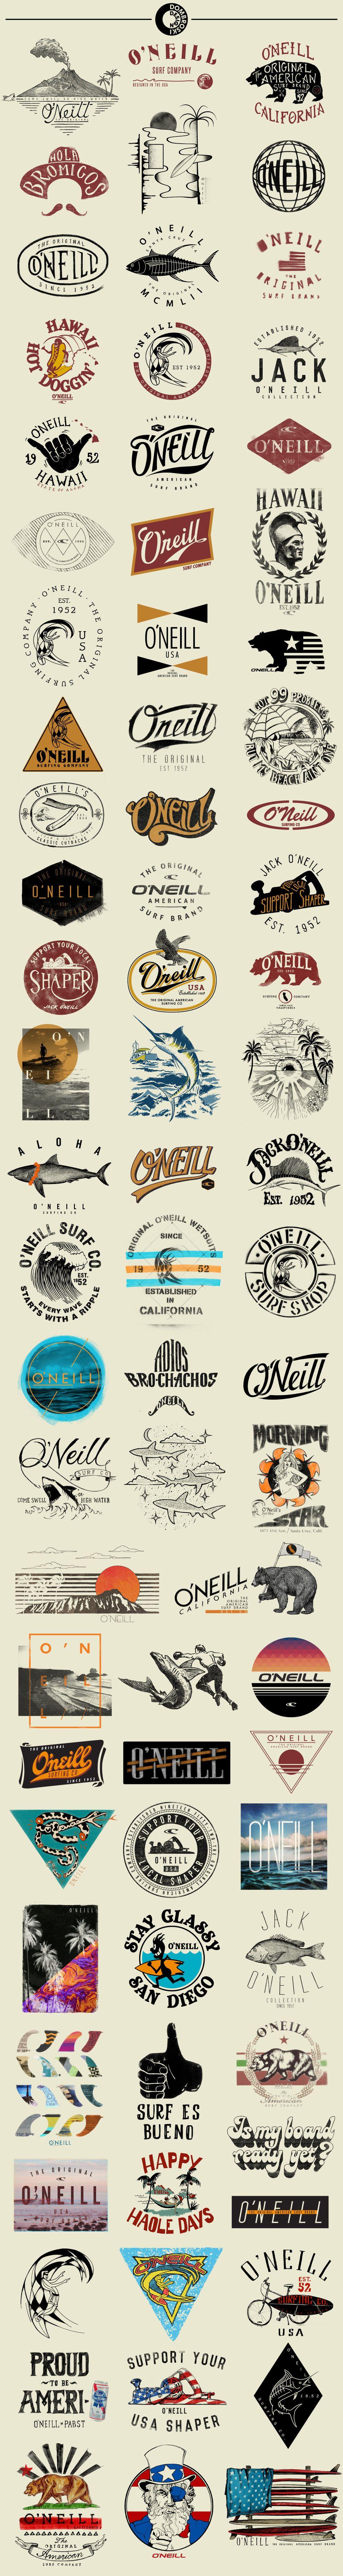 American Surf Company Logo - O'Neill T-Shirt Graphics | Graphic Design // Typography ...